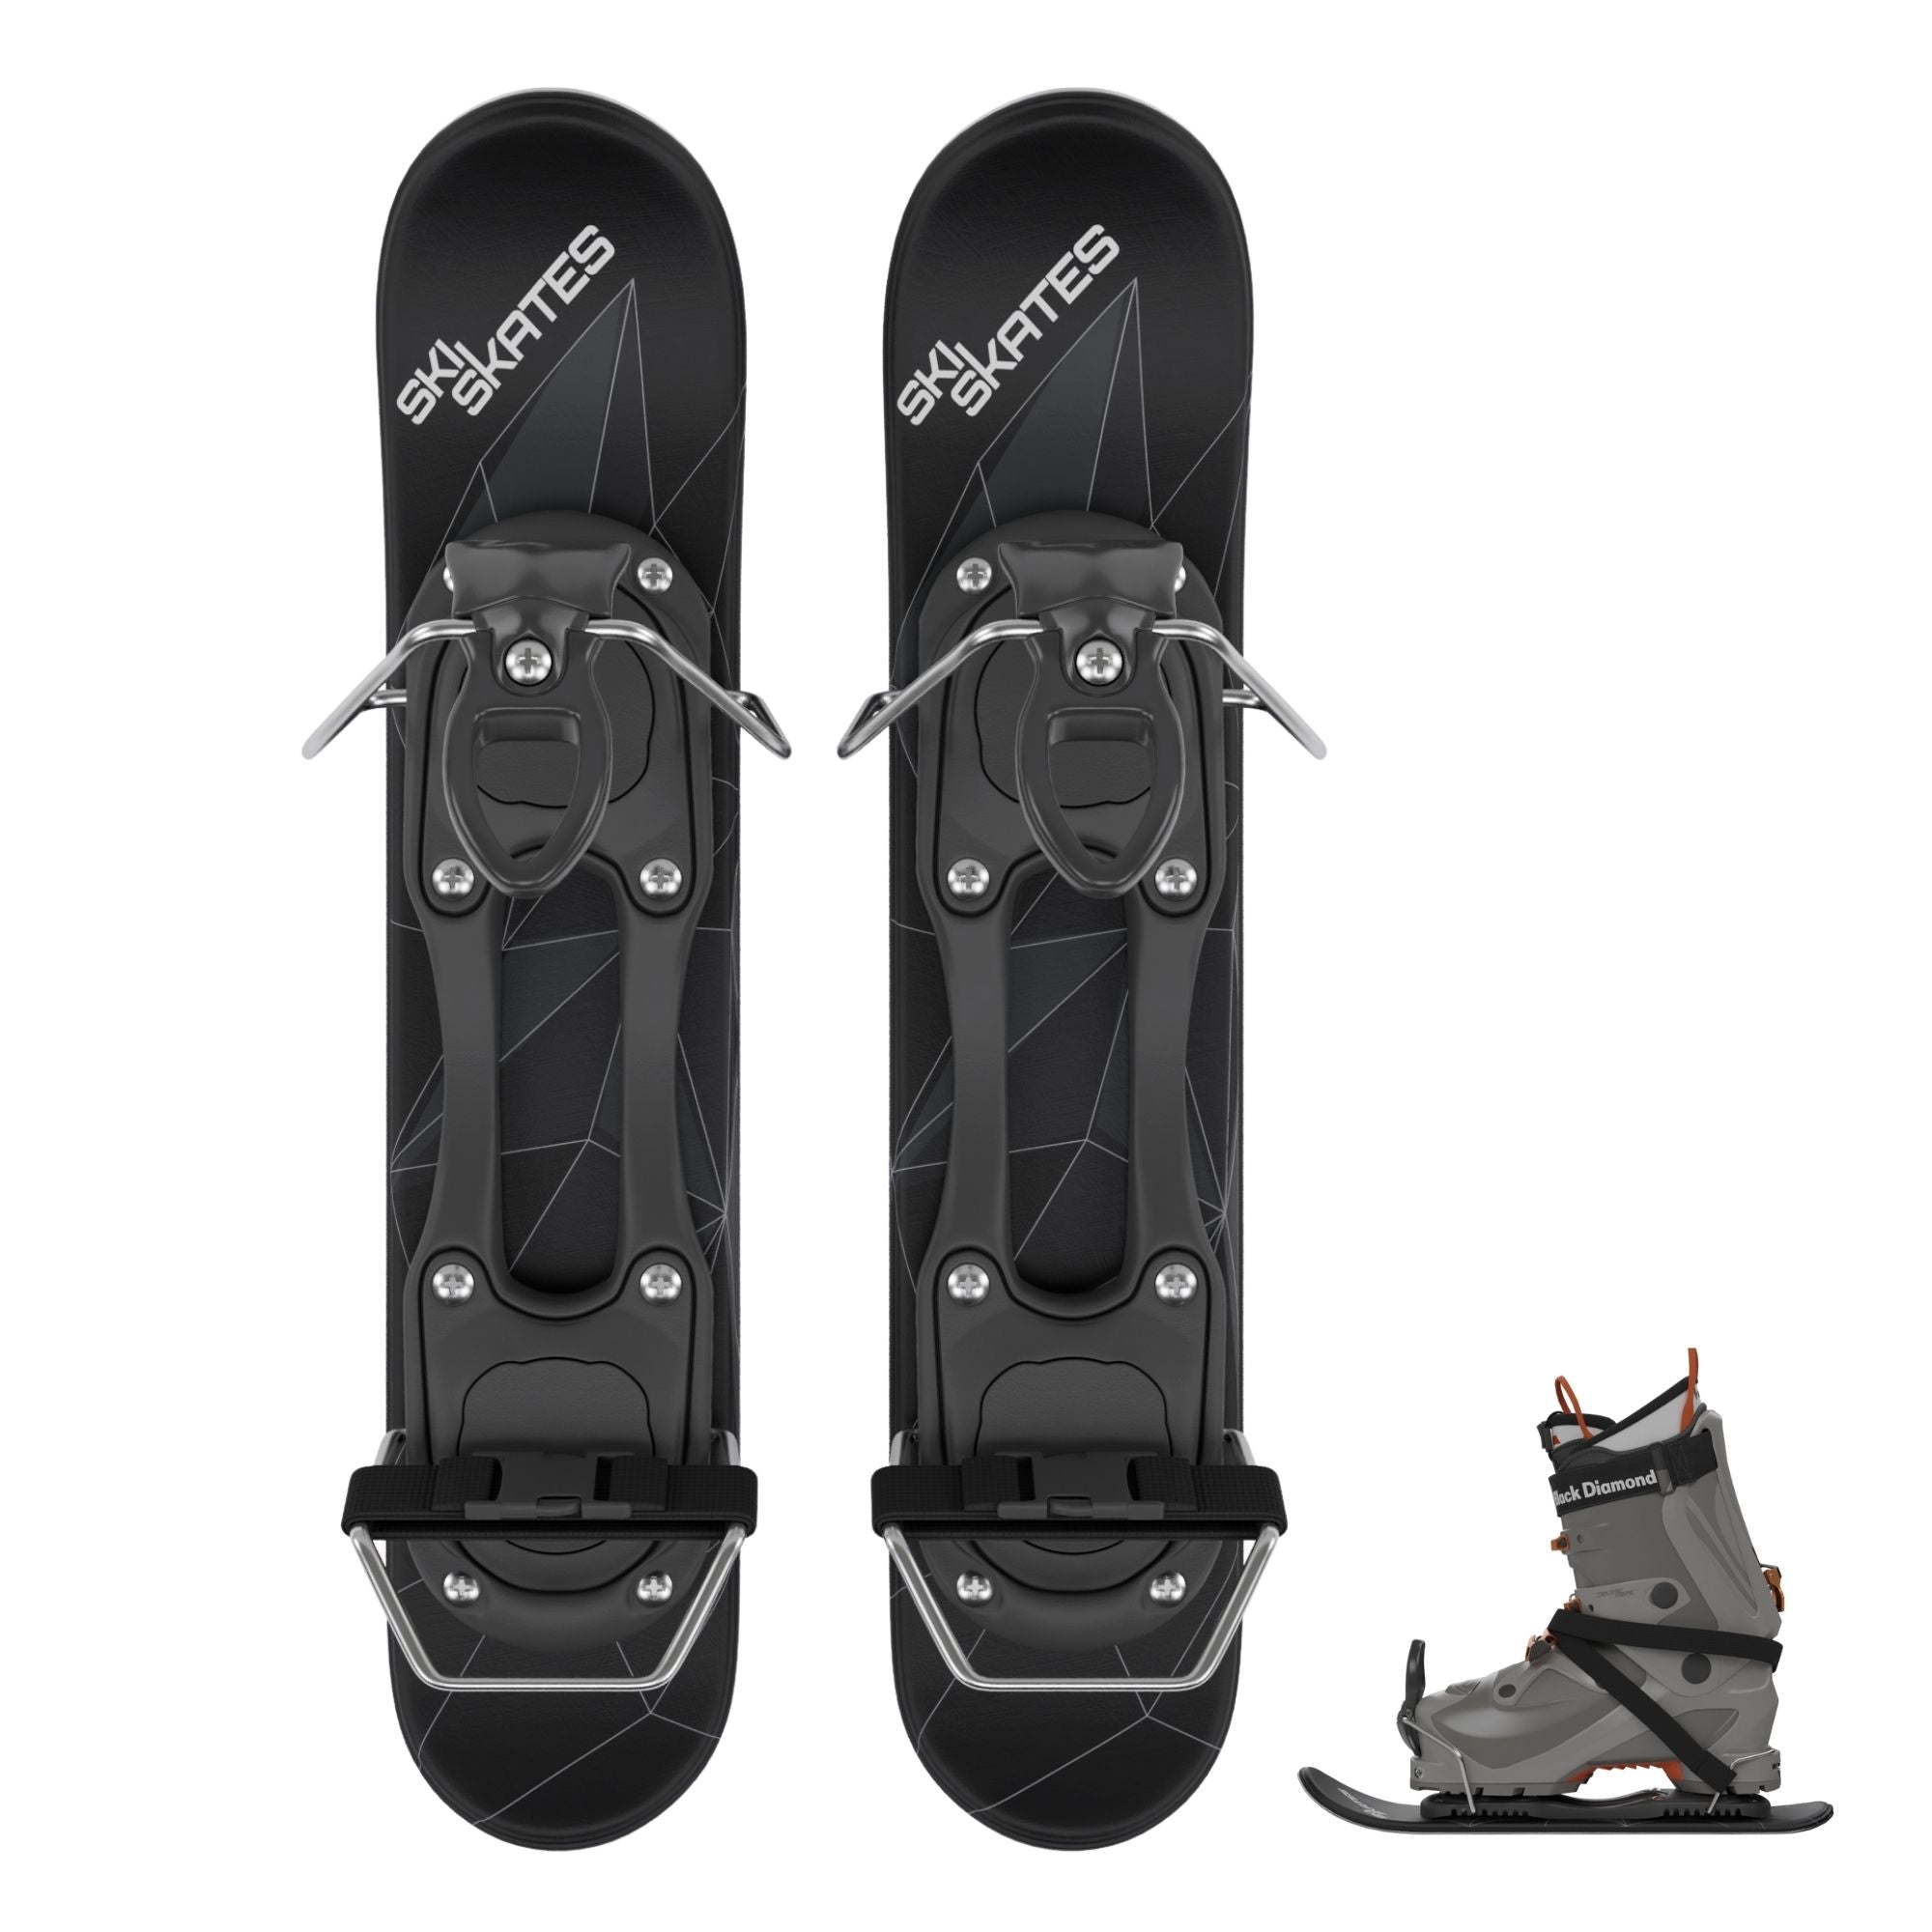 skiskates-snowfeet-miniski-shortski-shortestski-ski-boots